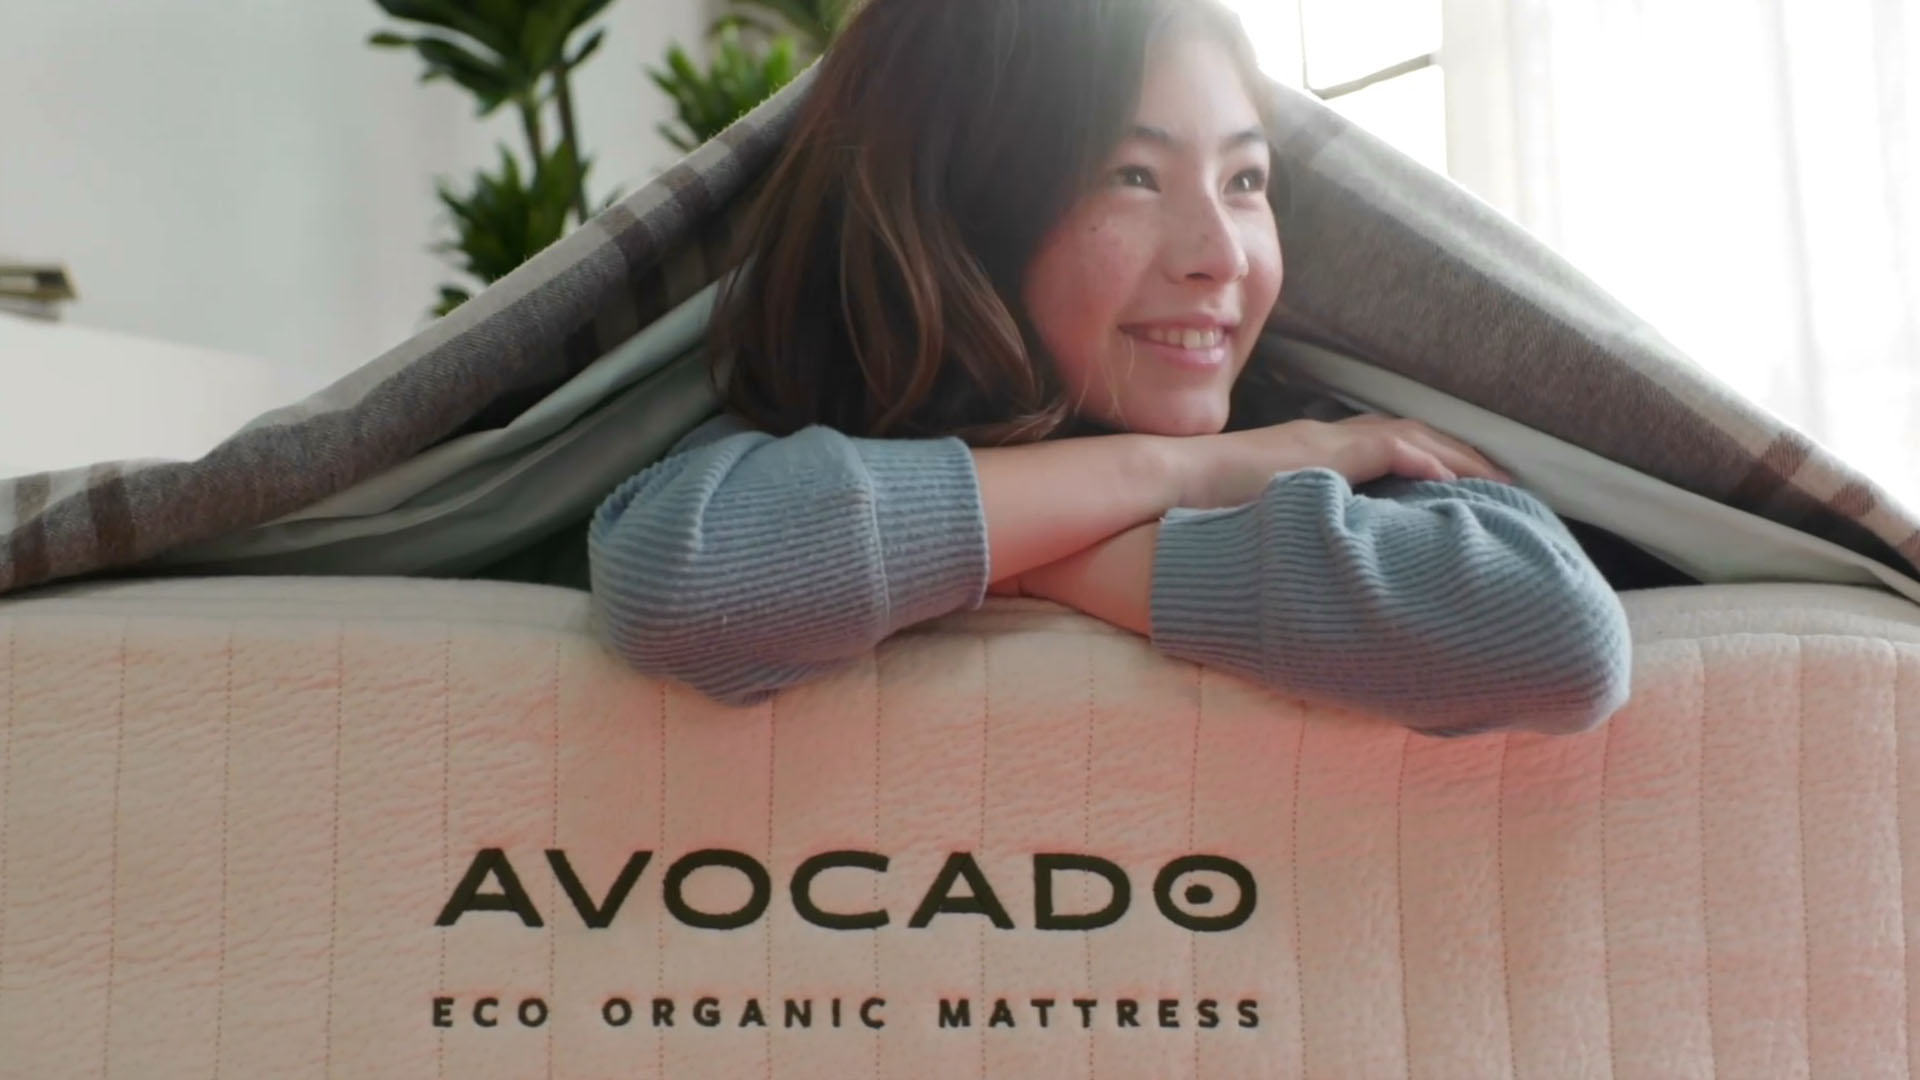 Who sells Avocado mattress near me in Dorchester